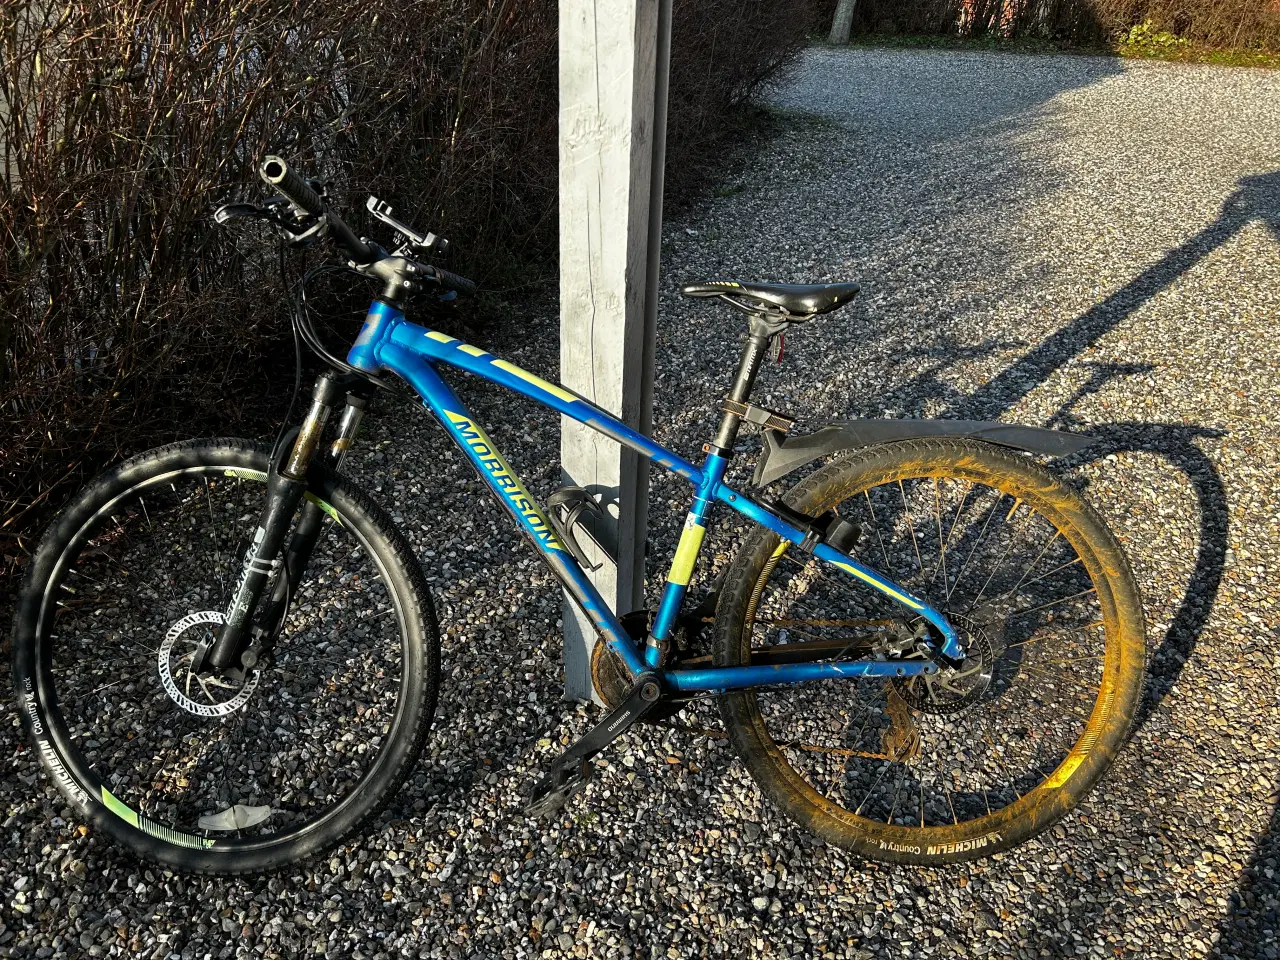 Billede 1 - Blå mountainbike